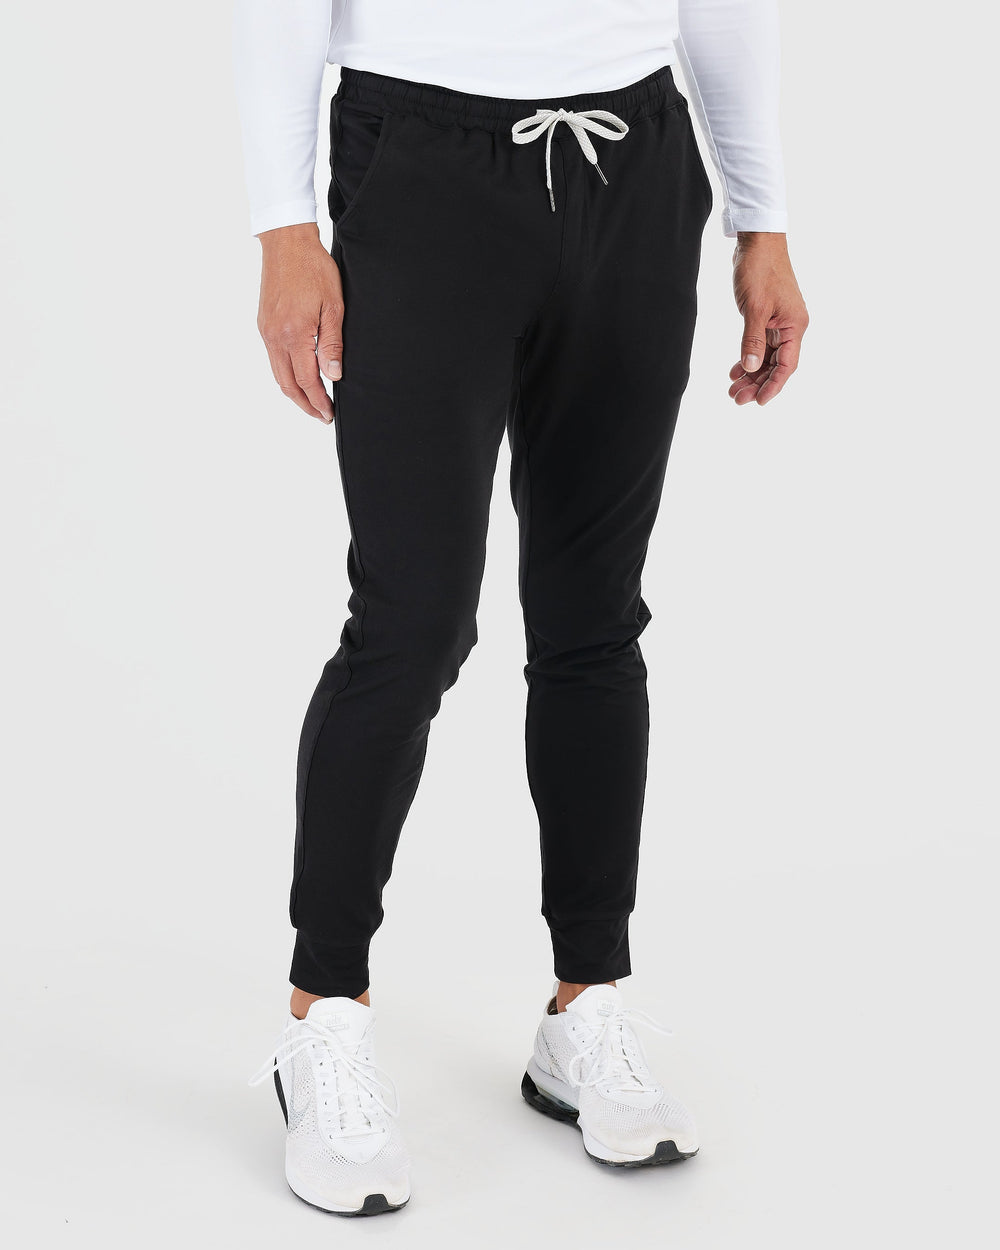 Pants  Brand New Scr Sportswear Mens Sweatpants Workout Athletic